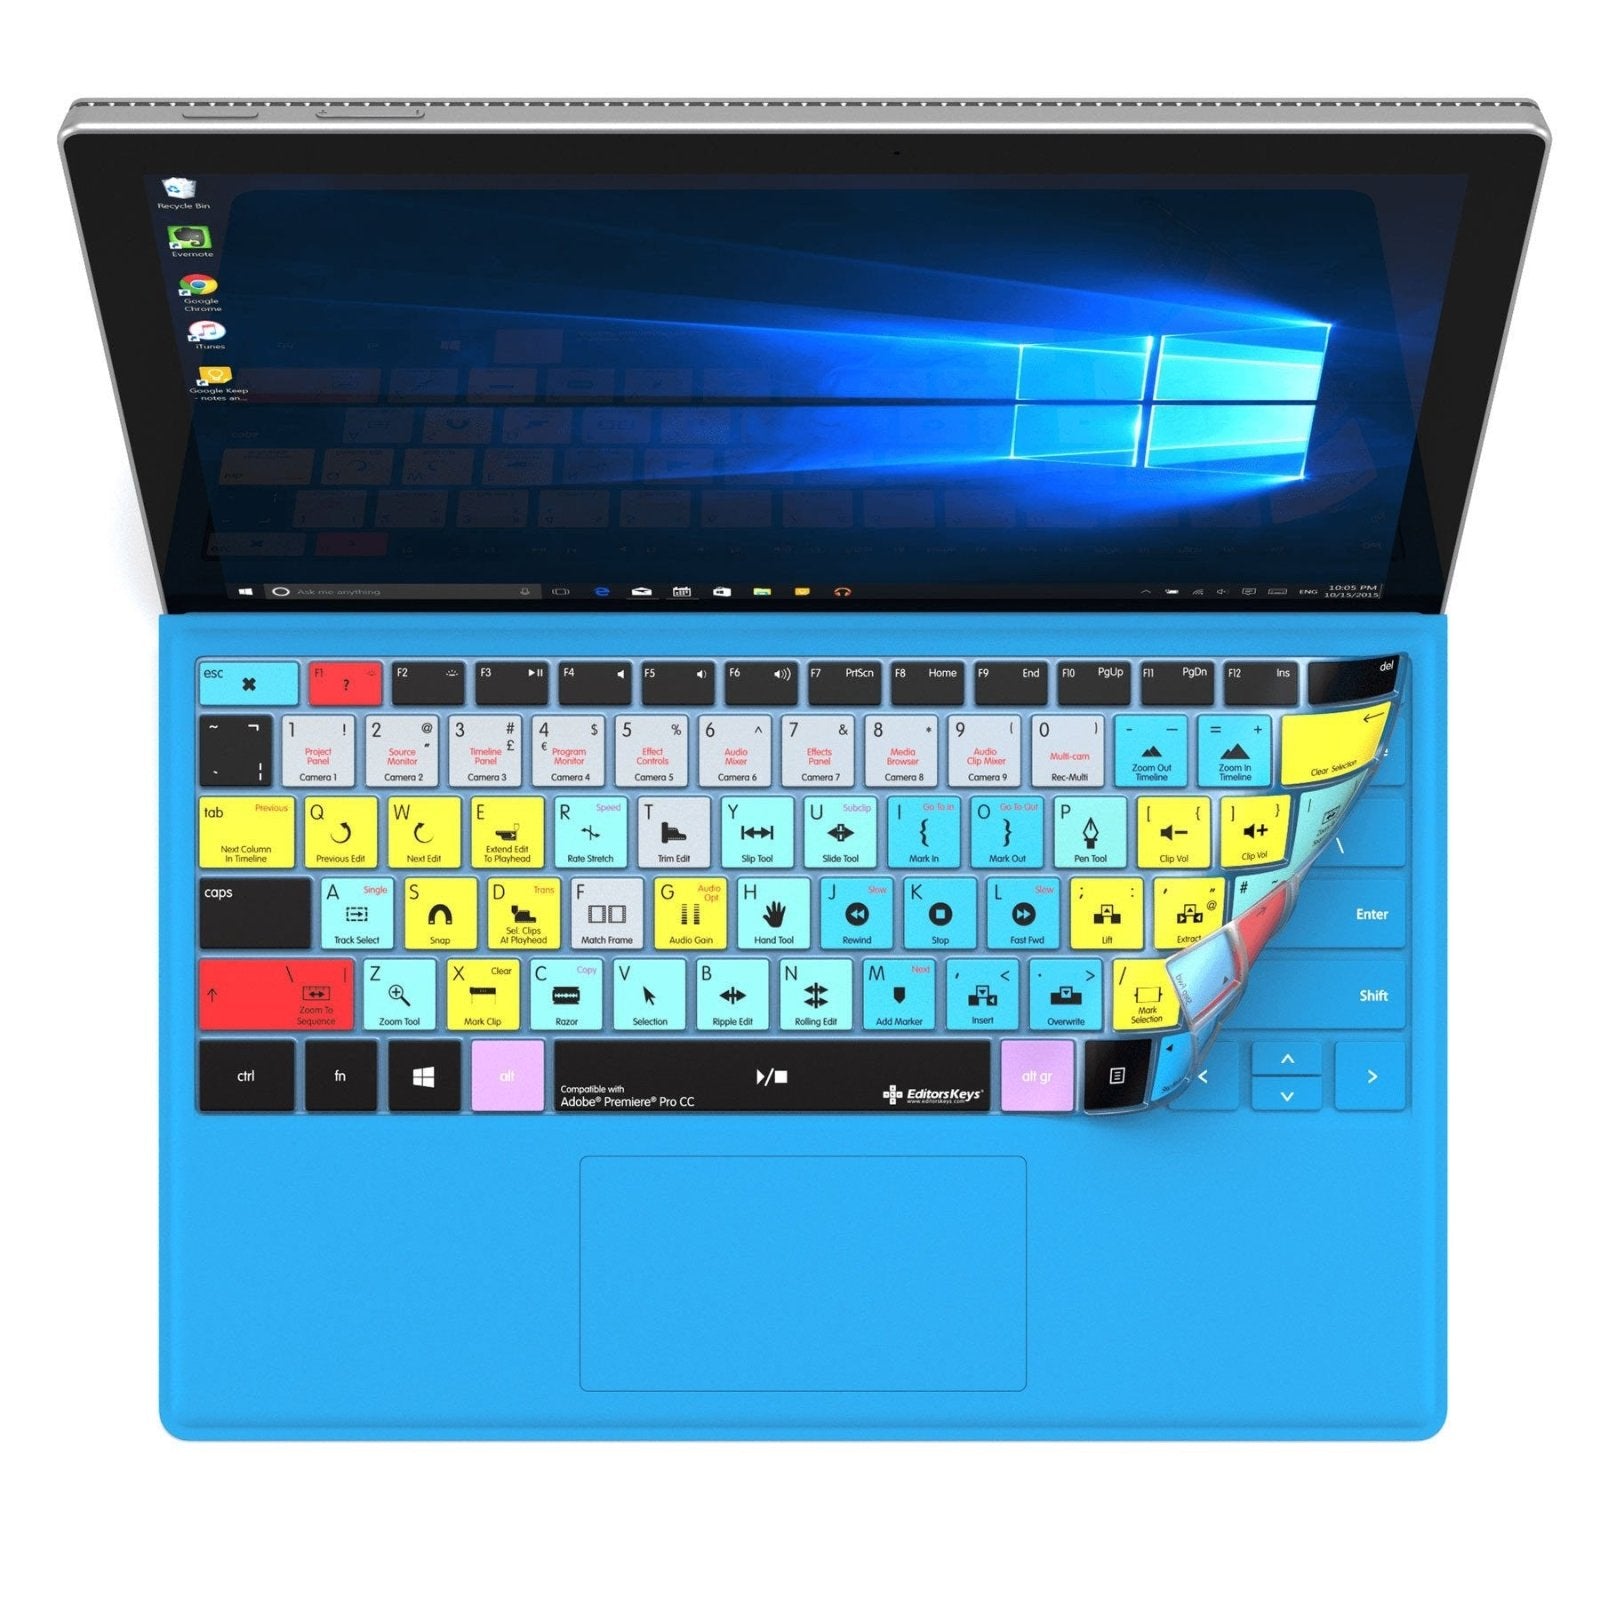 Adobe Premiere Pro Keyboard Covers for Microsoft Surface Line - Editors Keys